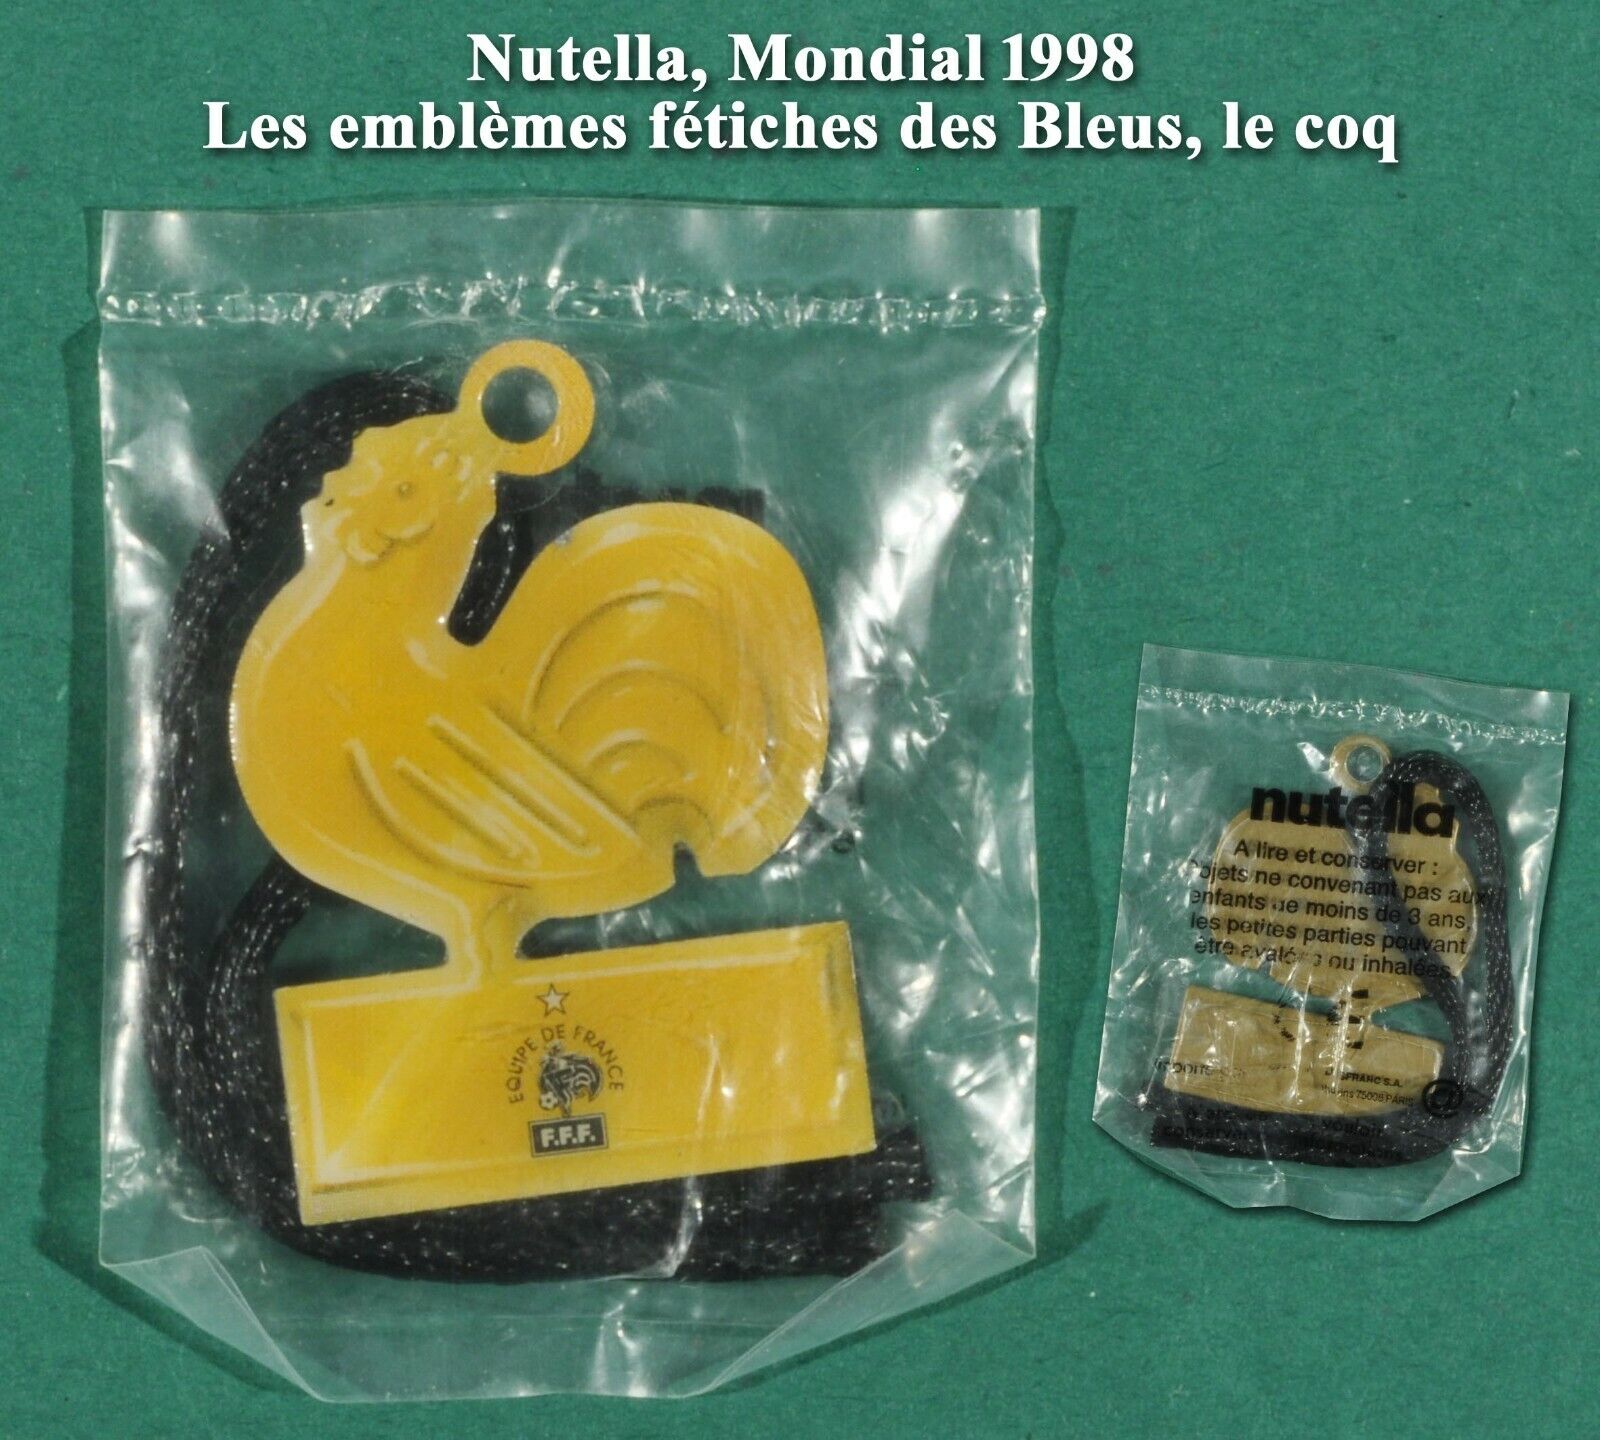 Nutella, 1998 Mondial, Les emblemes fetishes des Bleus, le rooster in bag 